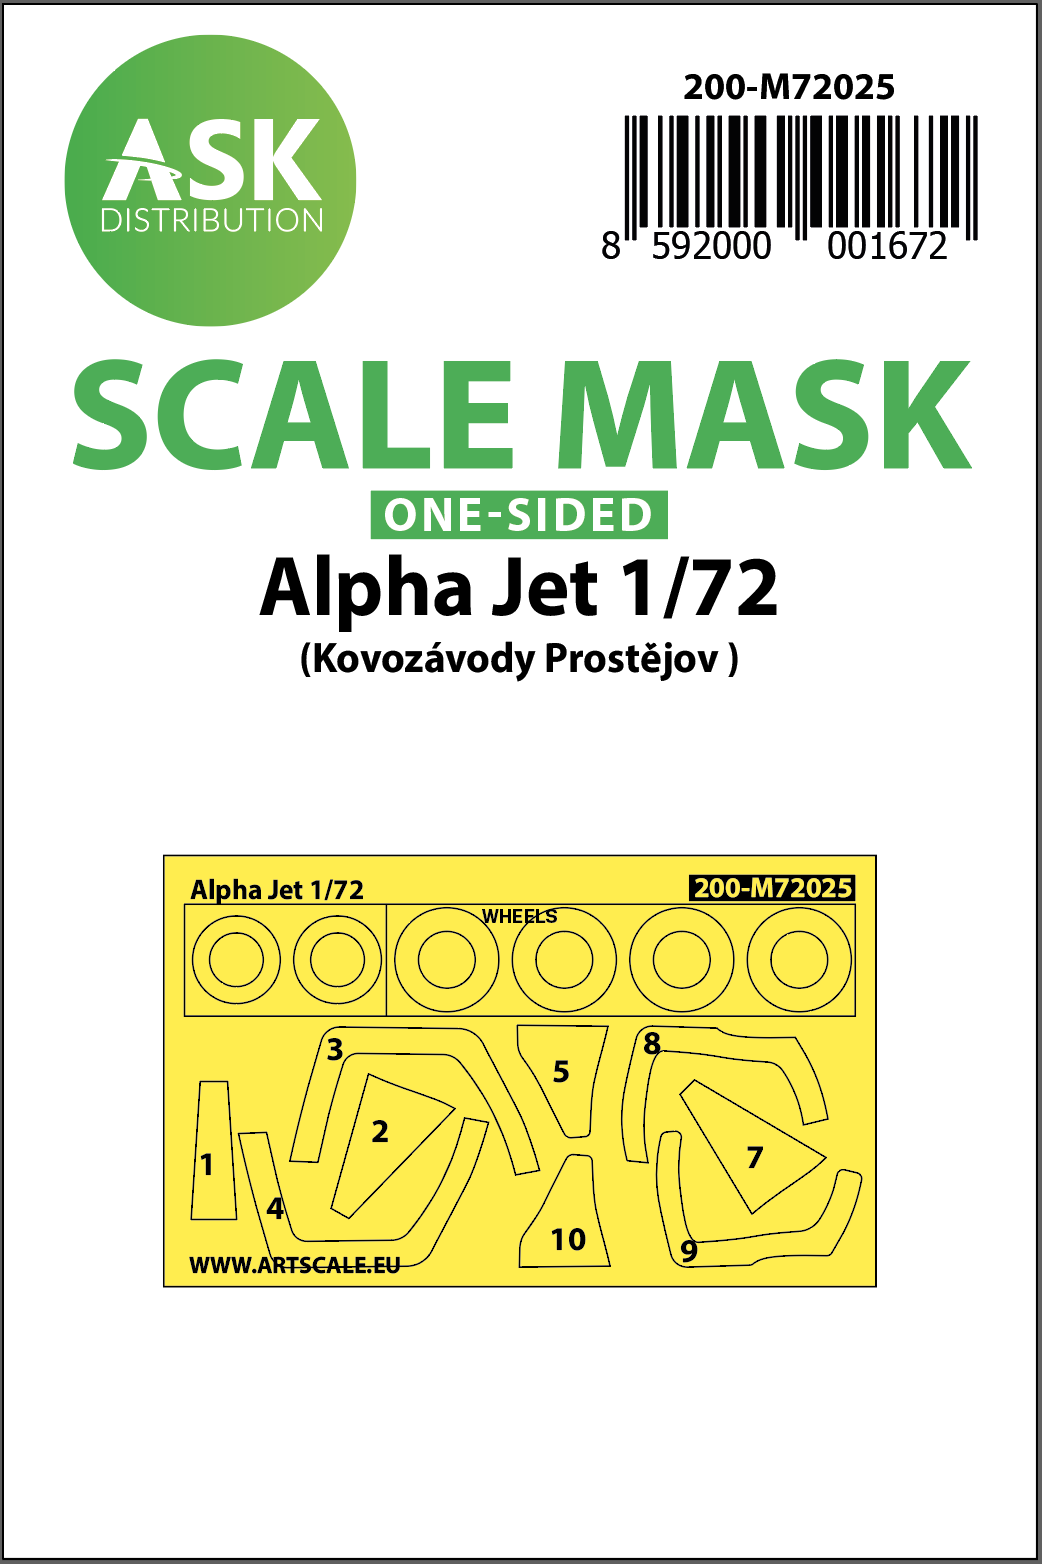 1/72 Alpha Jet one-sided painting mask for KPM Prostejov